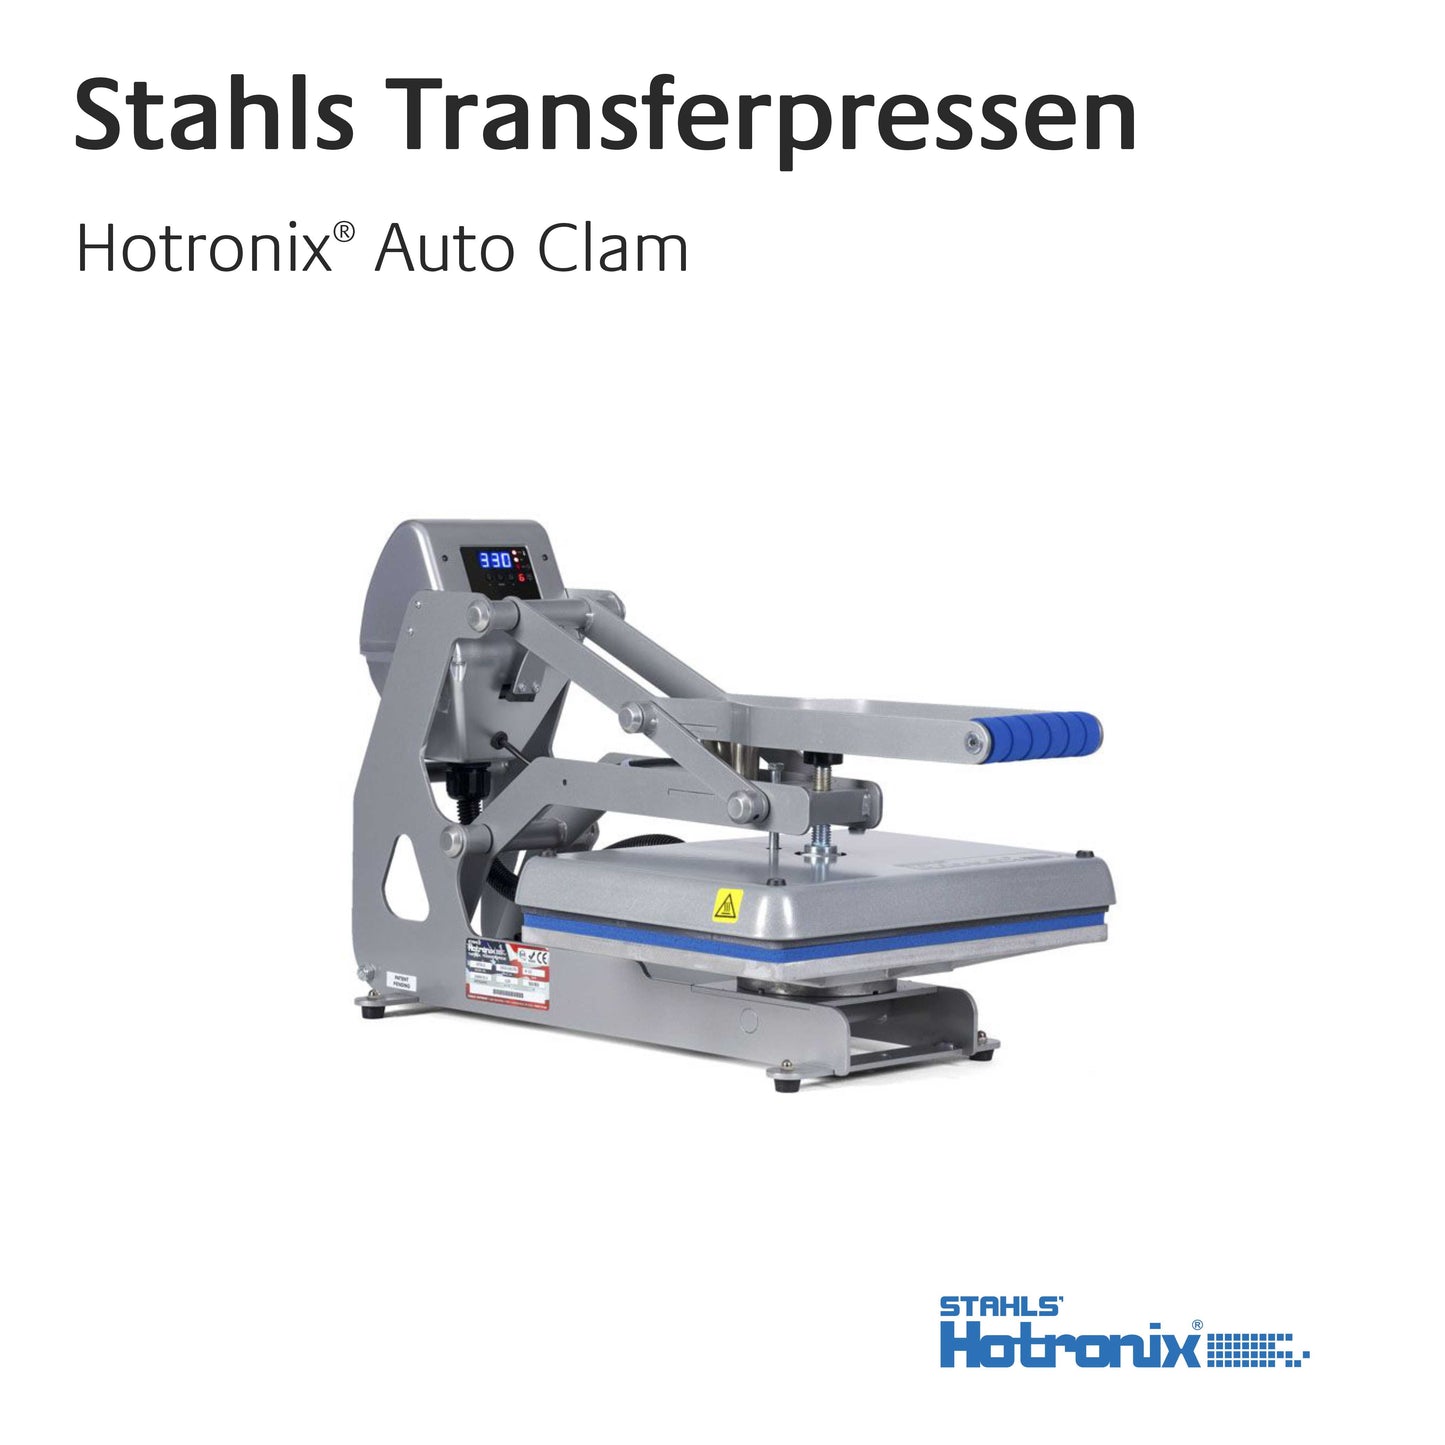 Stahls Transferpresse - Hotronix Auto Clam